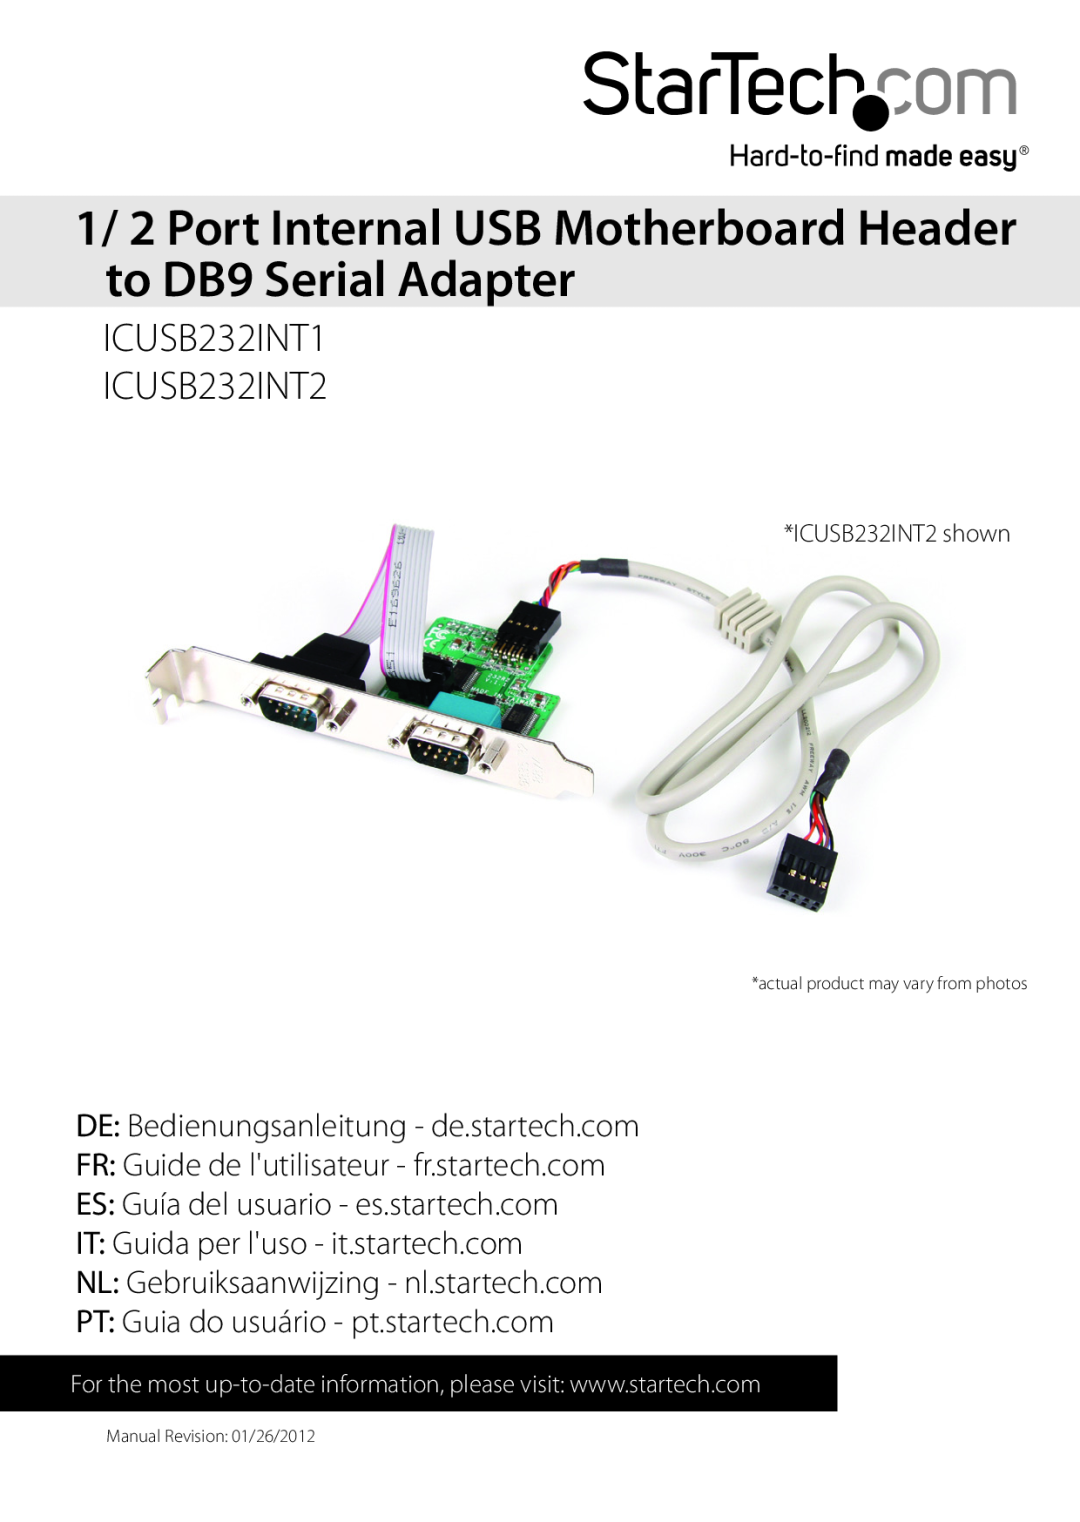 StarTech.com startech manual 1/ 2 Port Internal USB Motherboard Header to DB9 Serial Adapter, ICUSB232INT1 ICUSB232INT2 